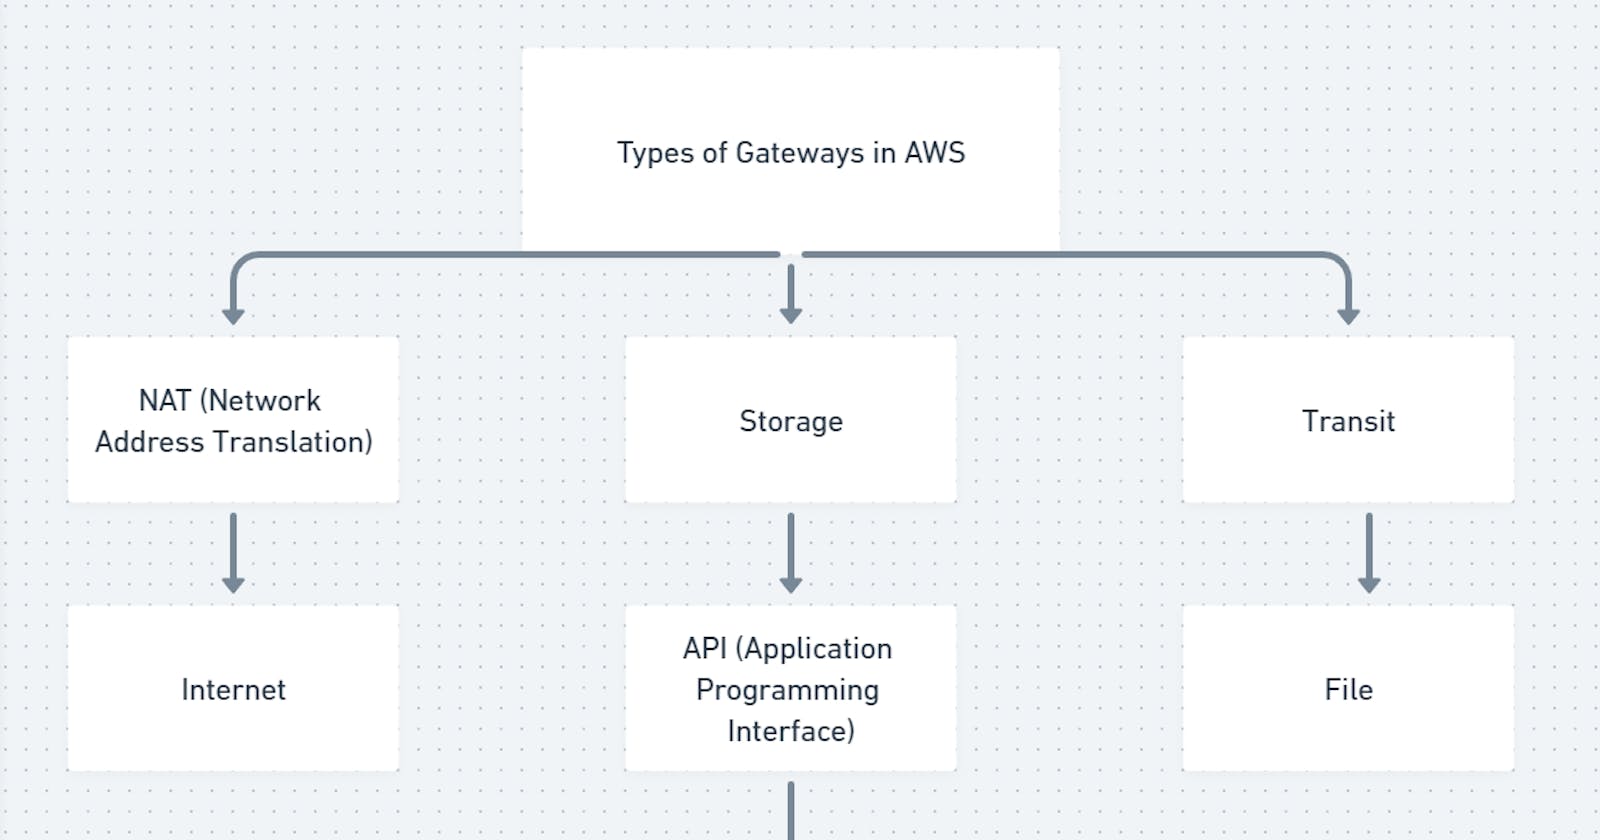 Types of Gateways in AWS